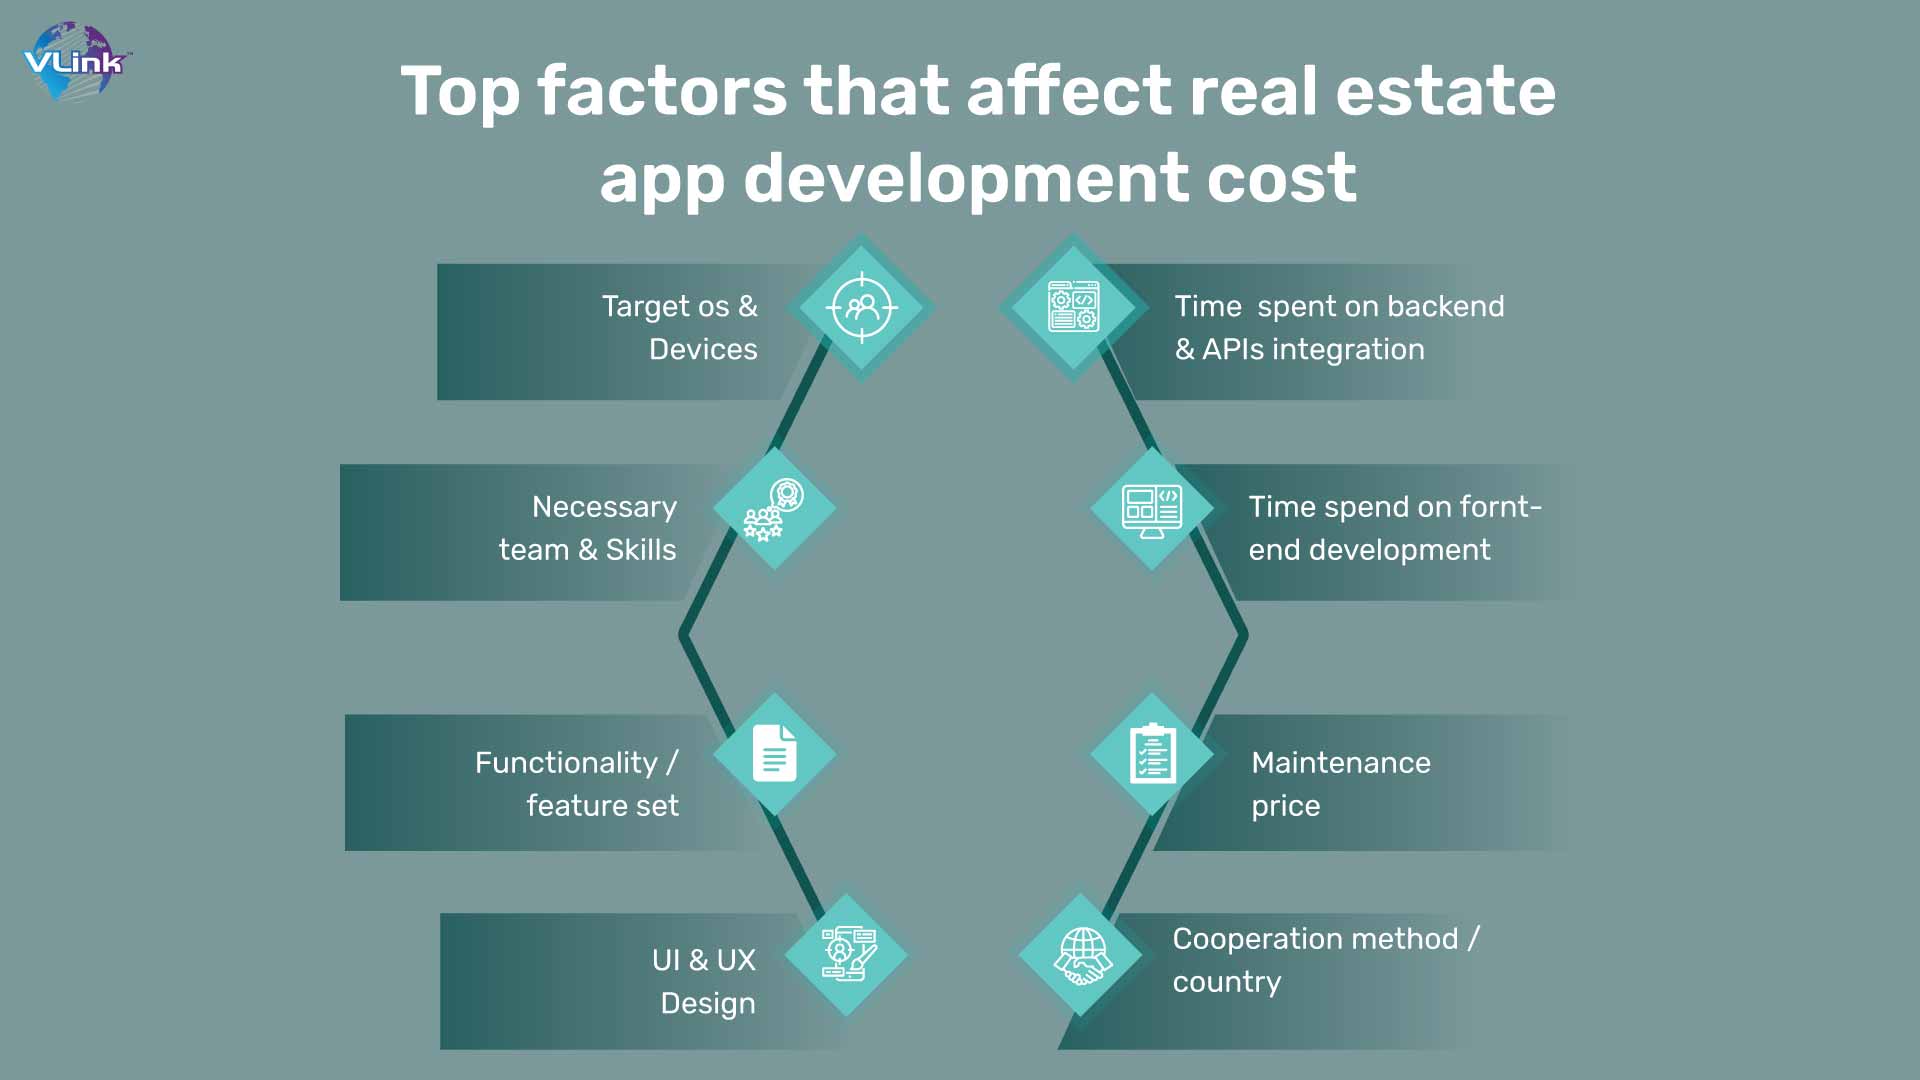 Top factors that affect real estate app development cost